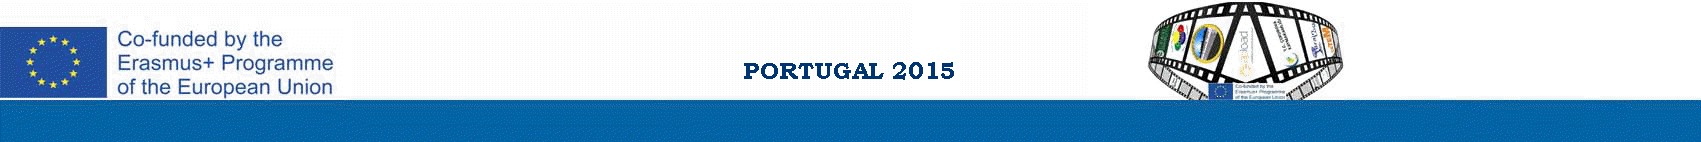 PORTUGAL 2015